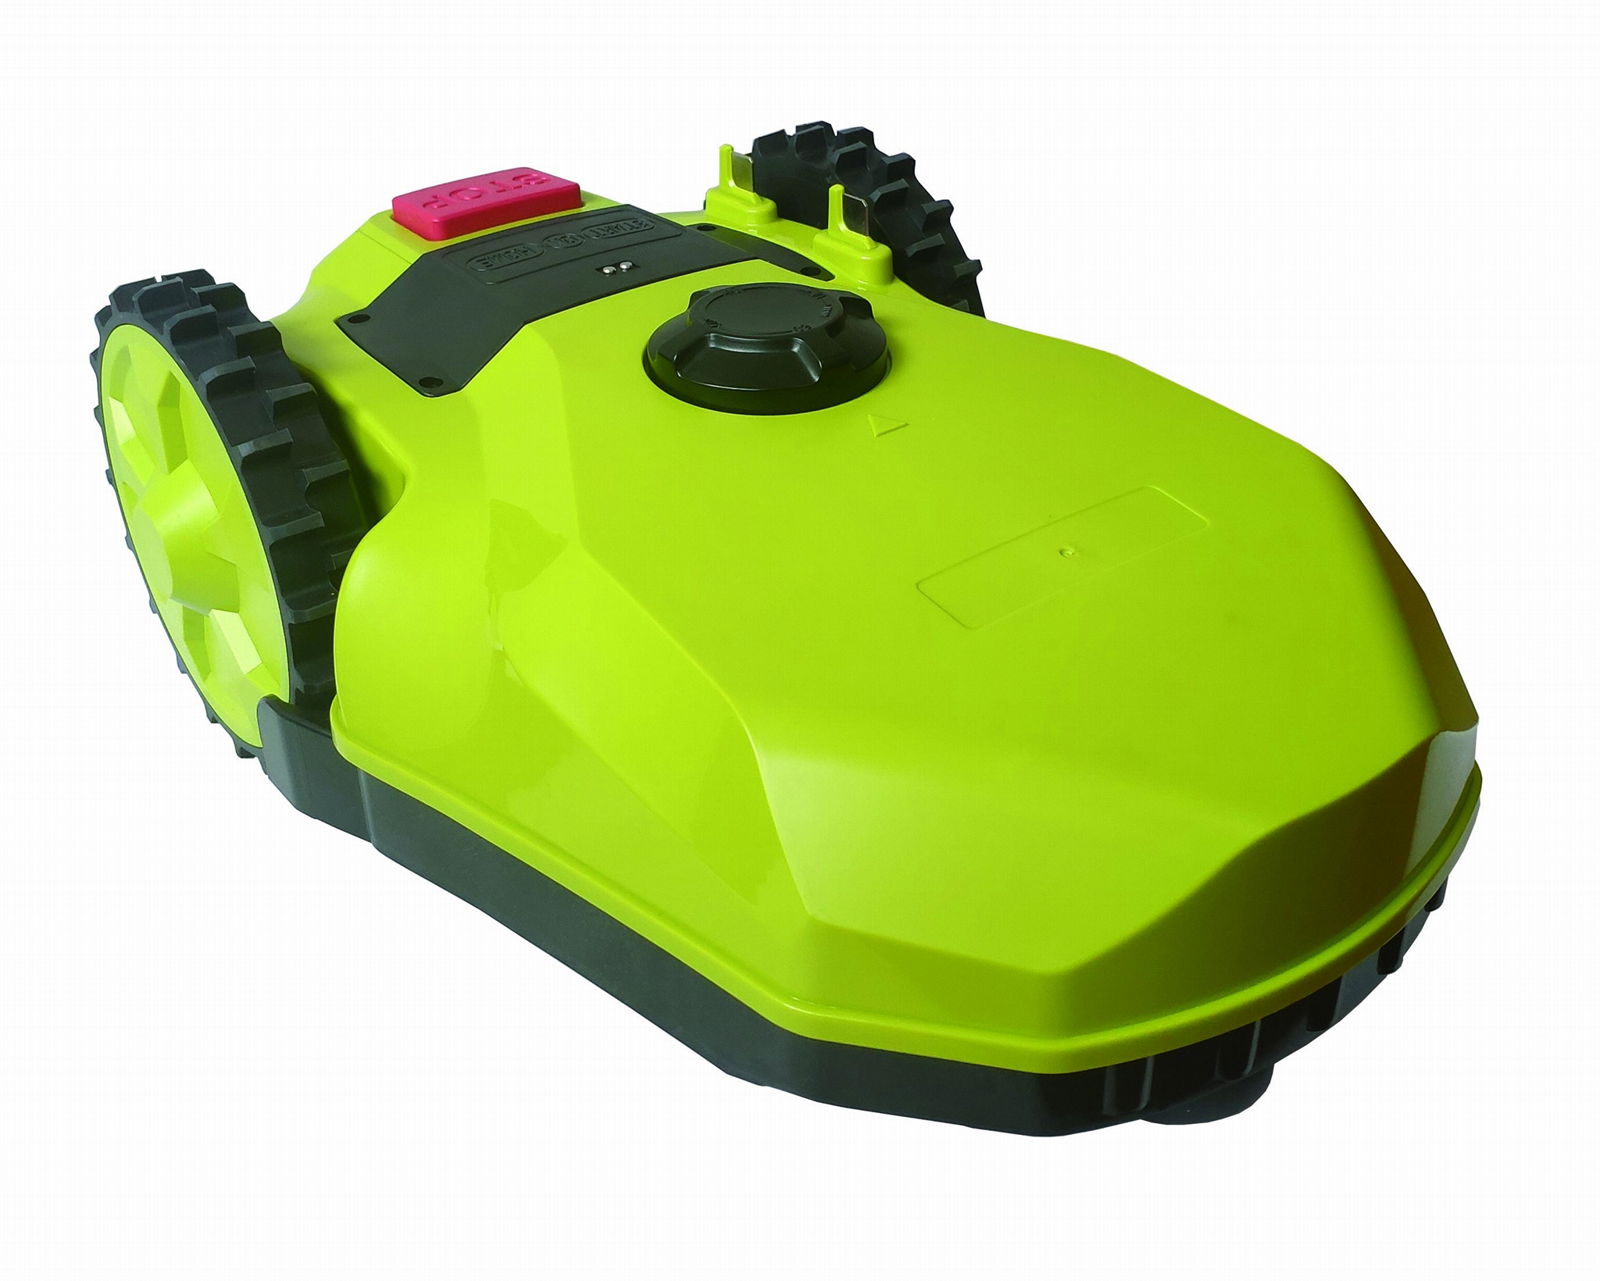 Robotic Lawn Mower 5